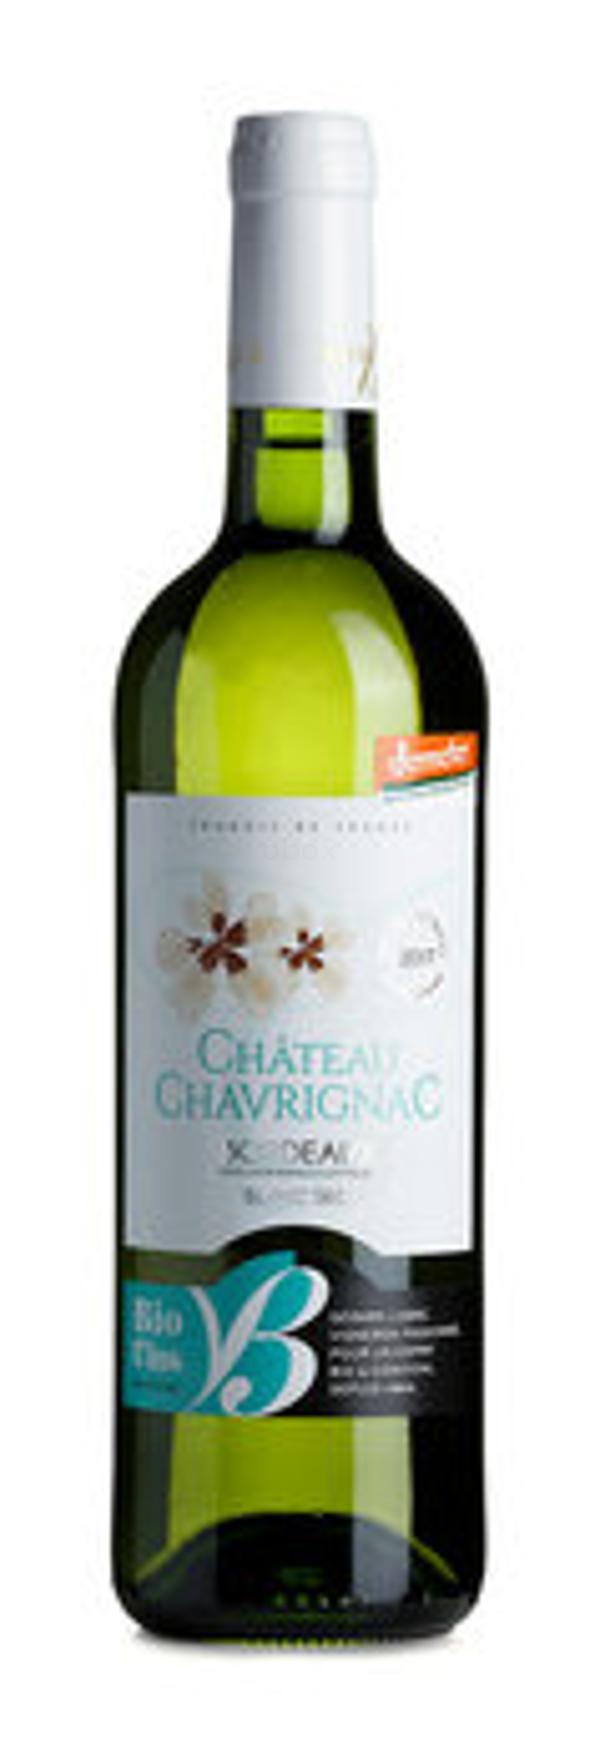 Produktfoto zu Bordeaux weiß, 0,75 l